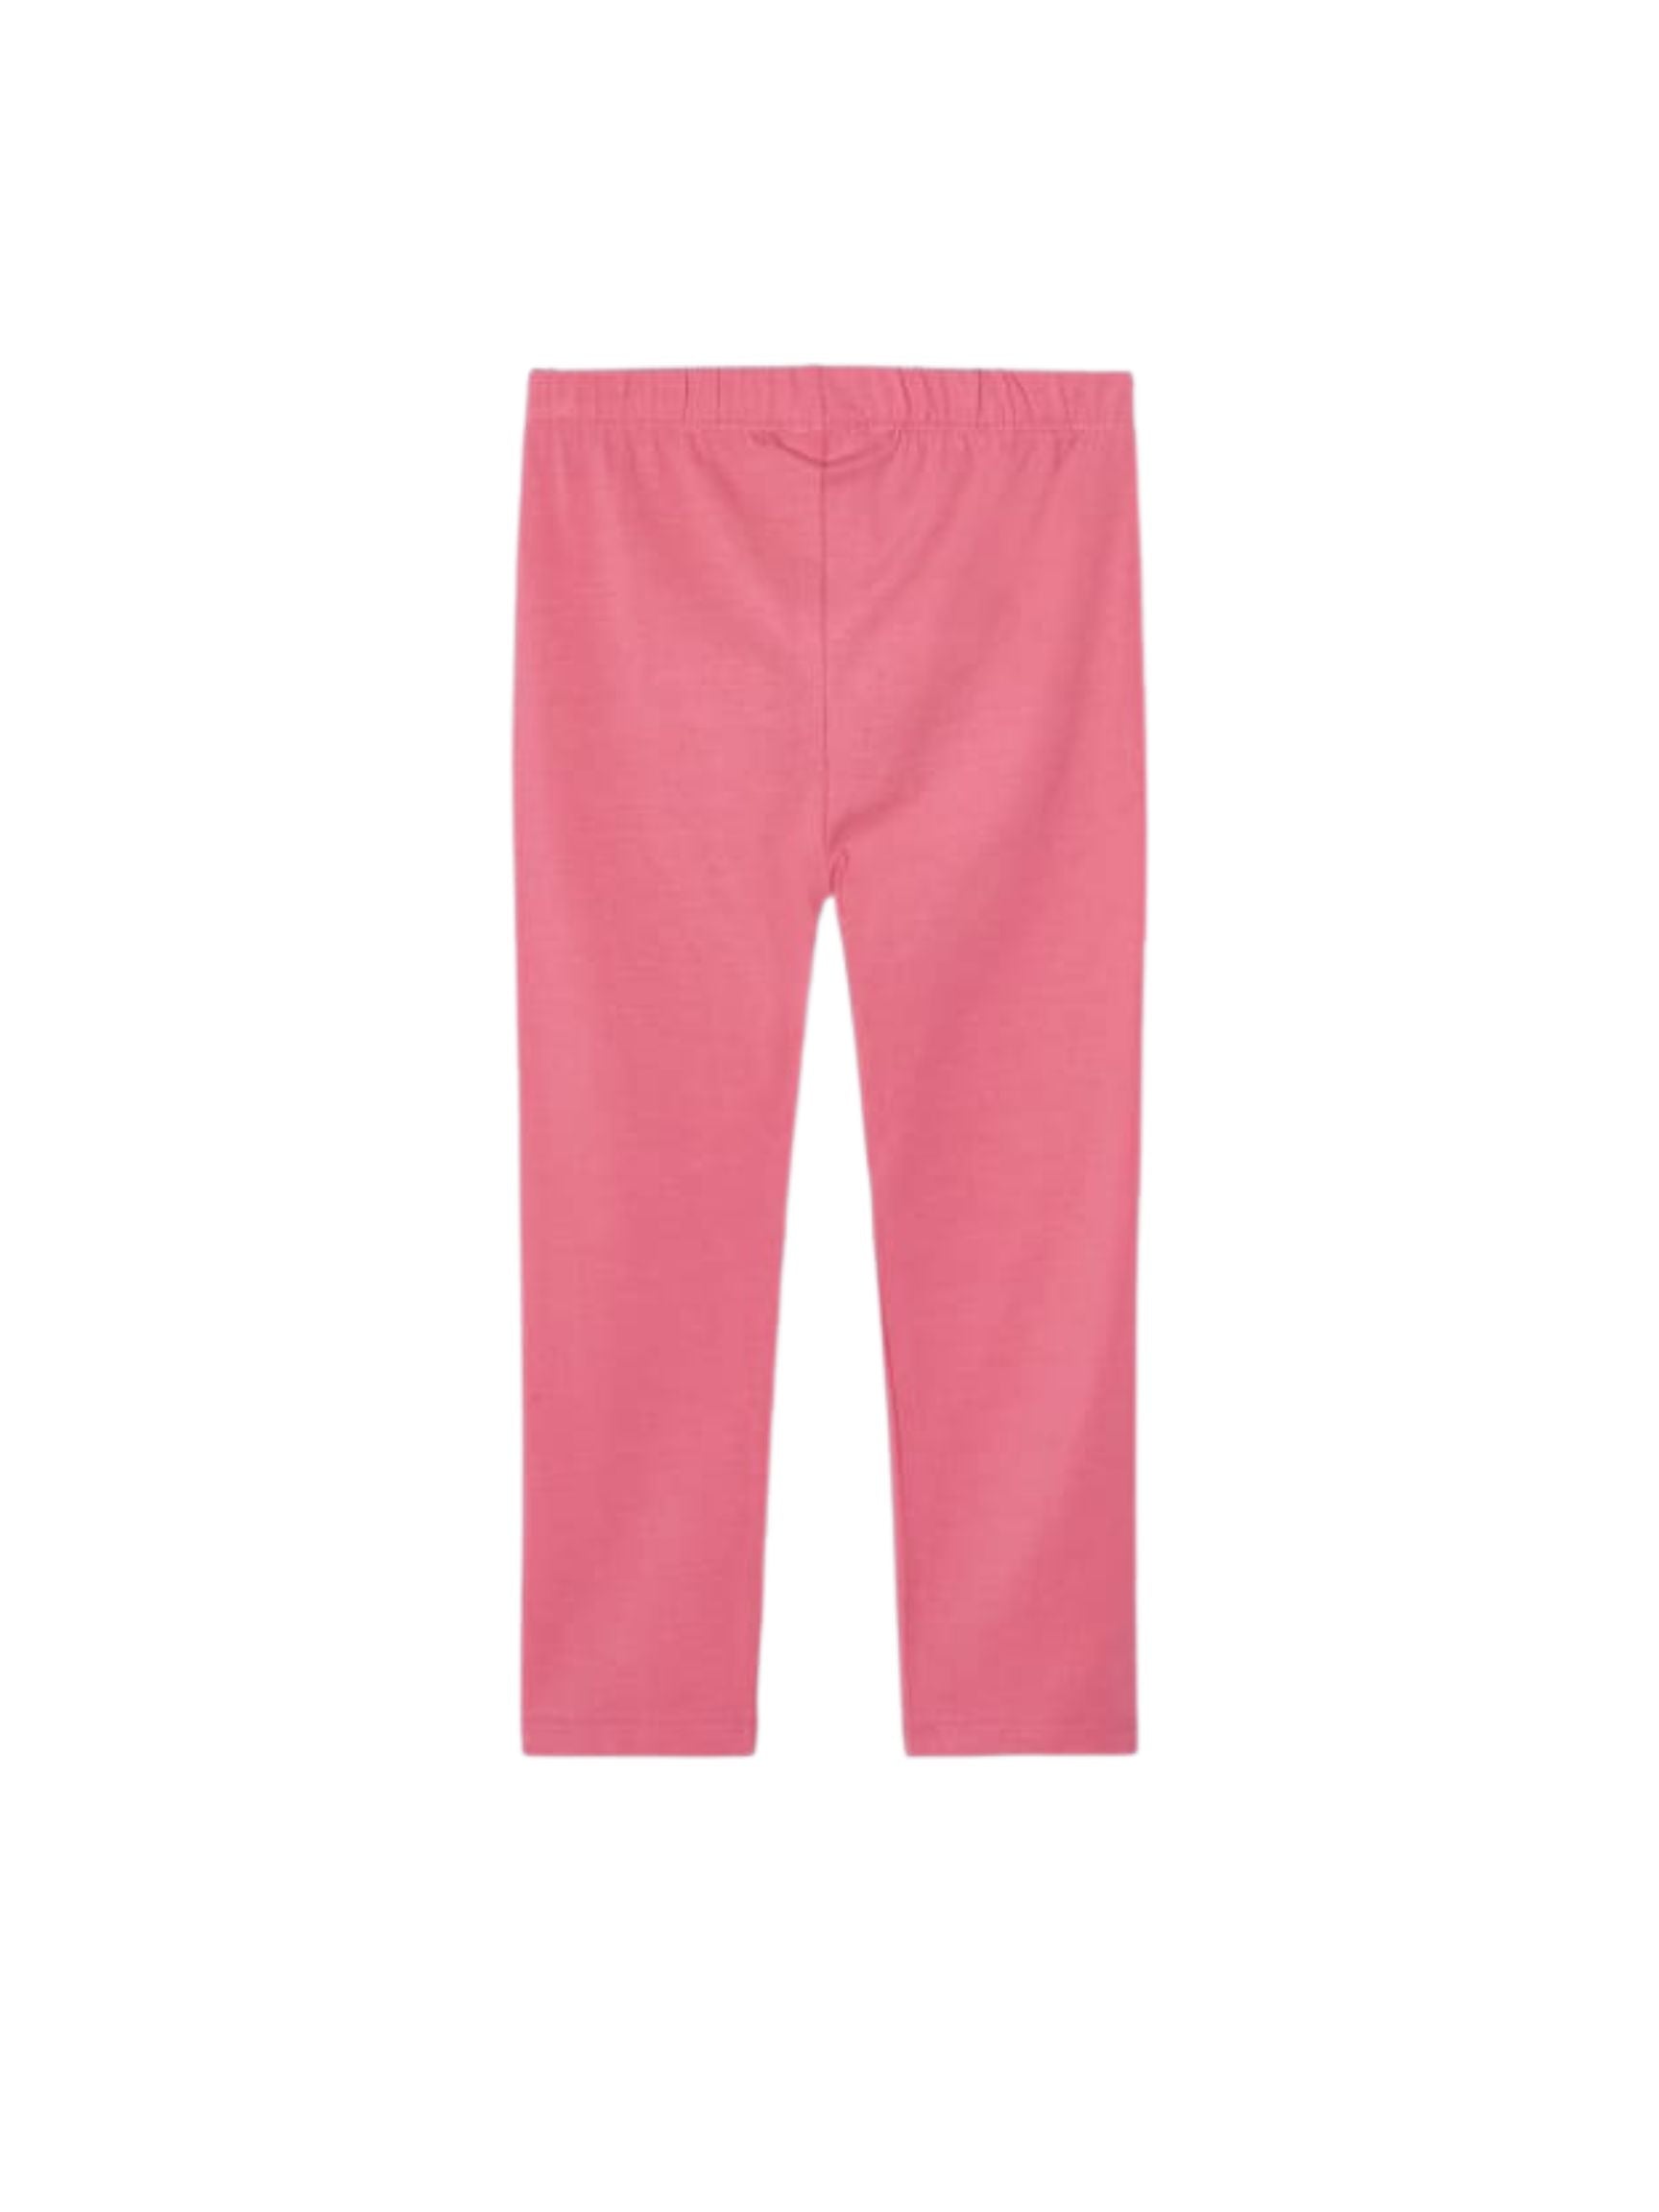 back of pink leggings